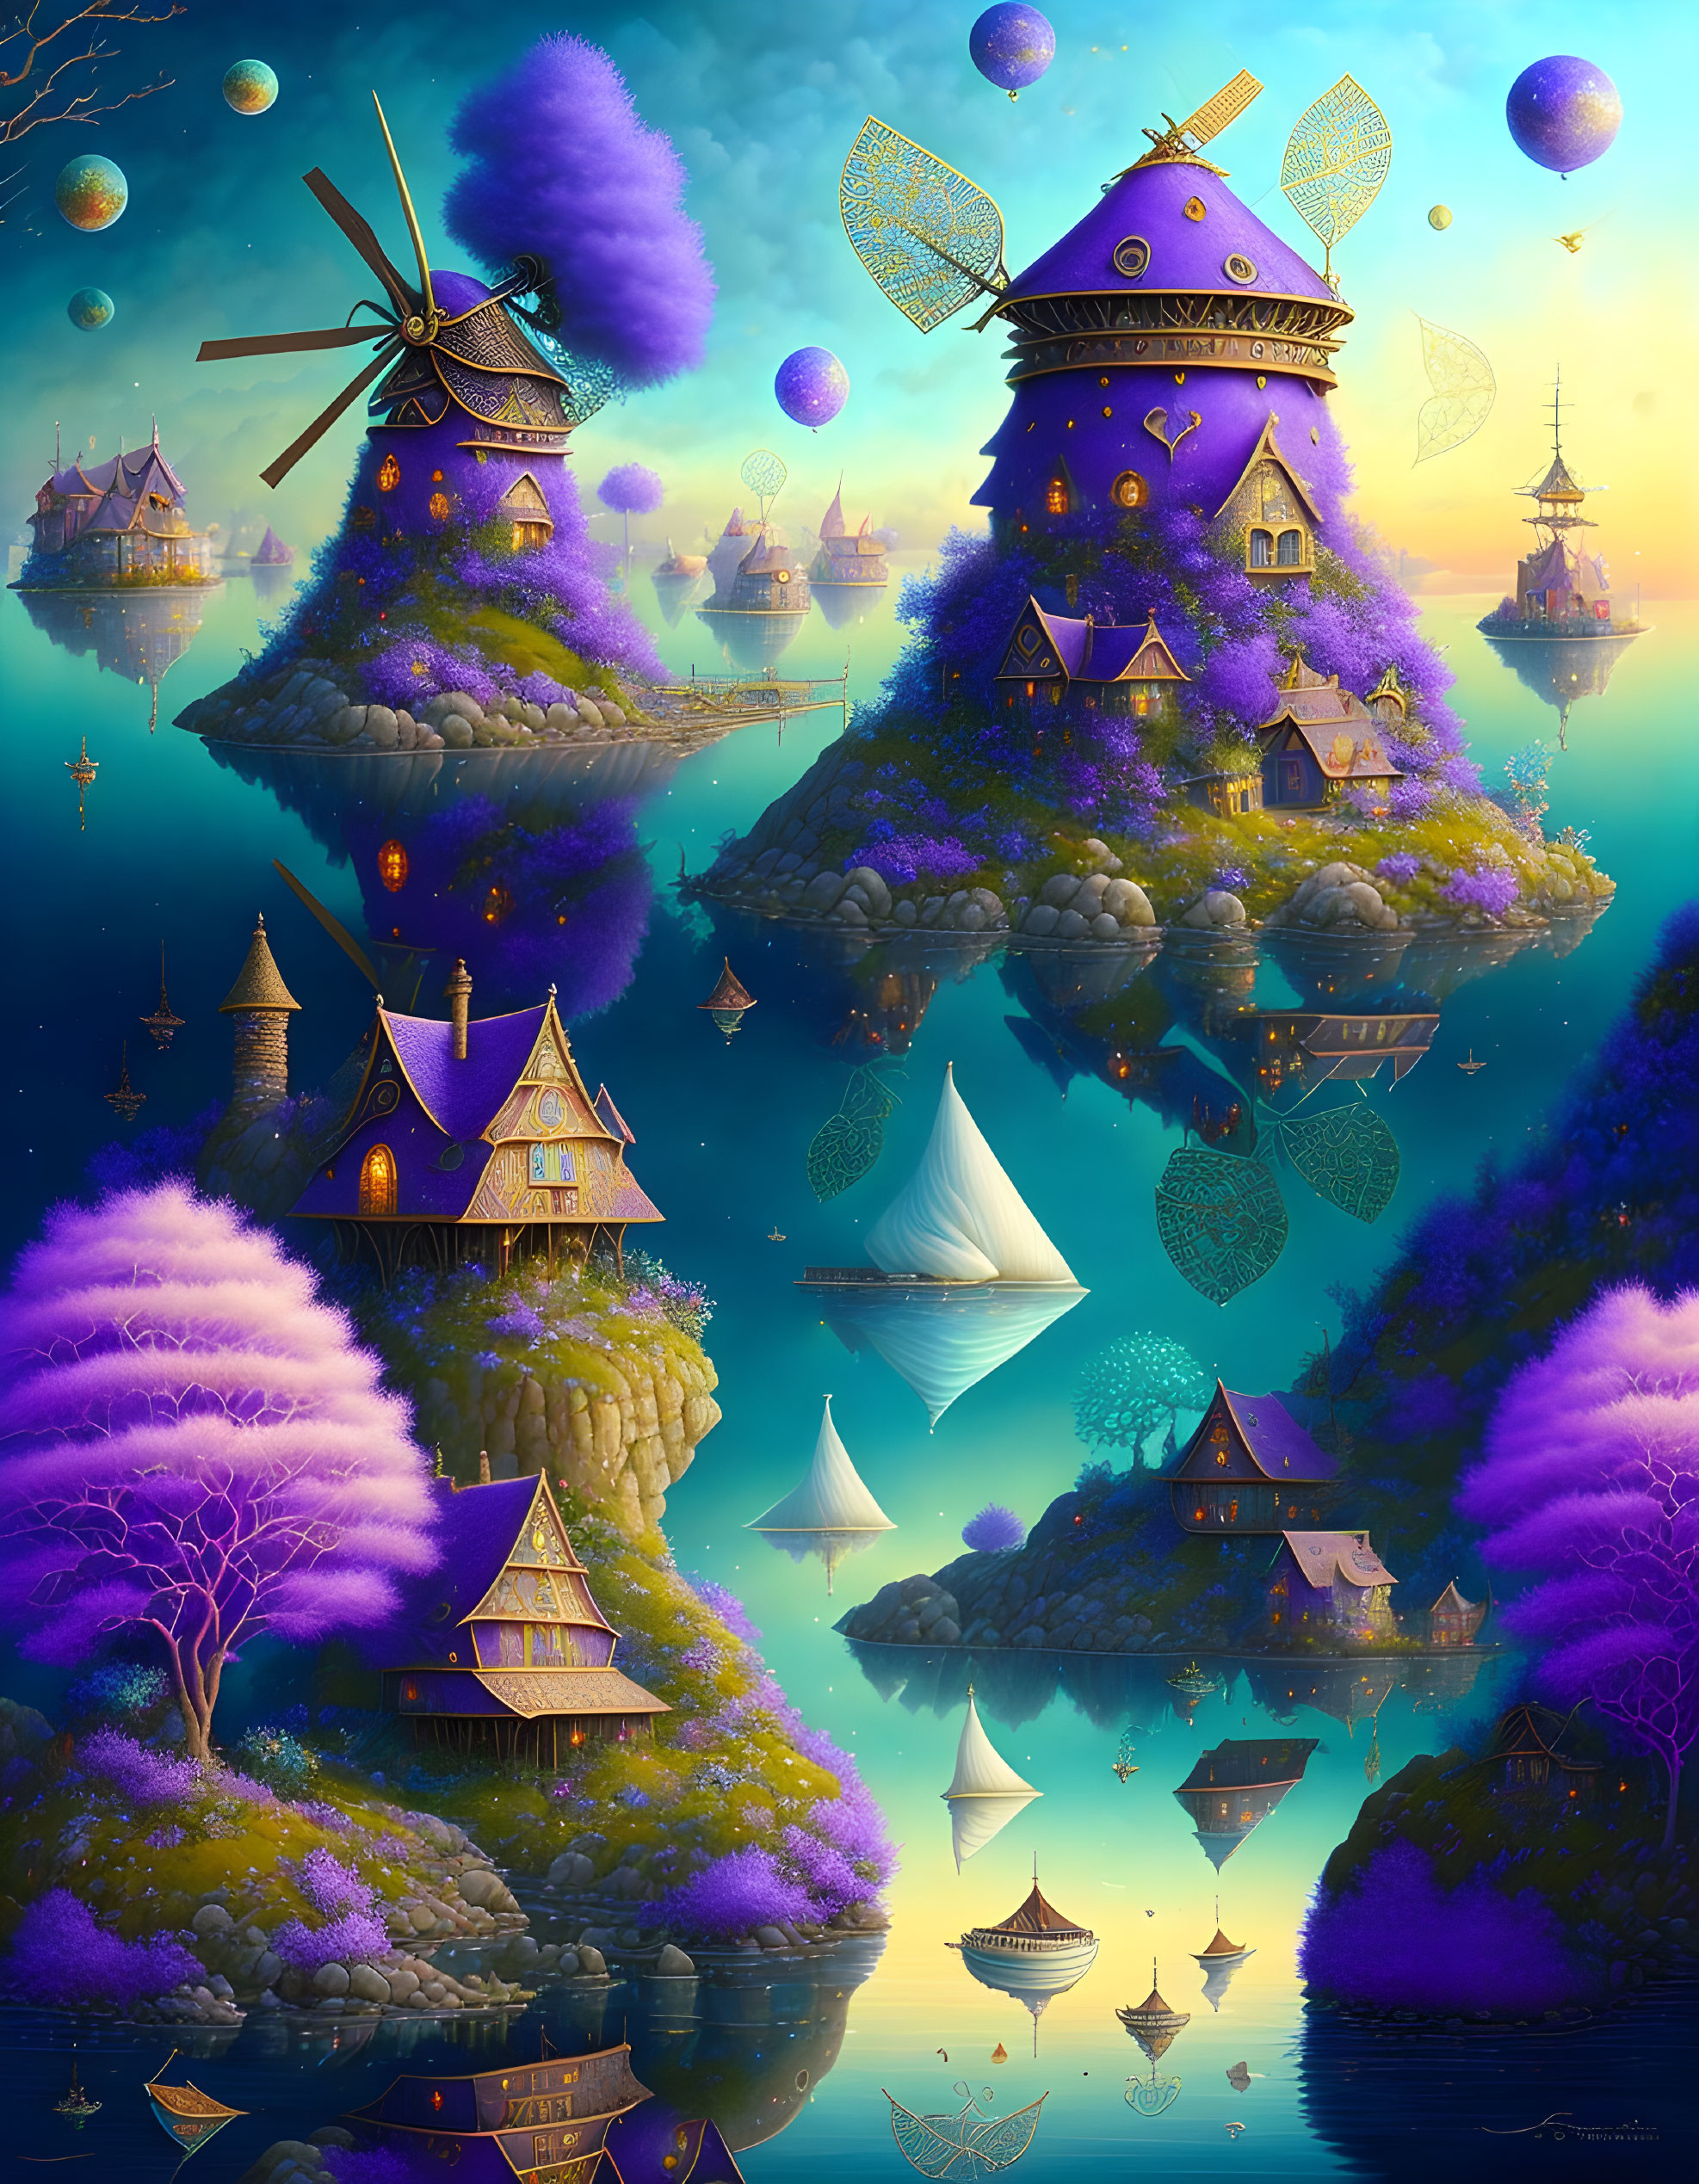 Twilight floating island with purple foliage and windmills